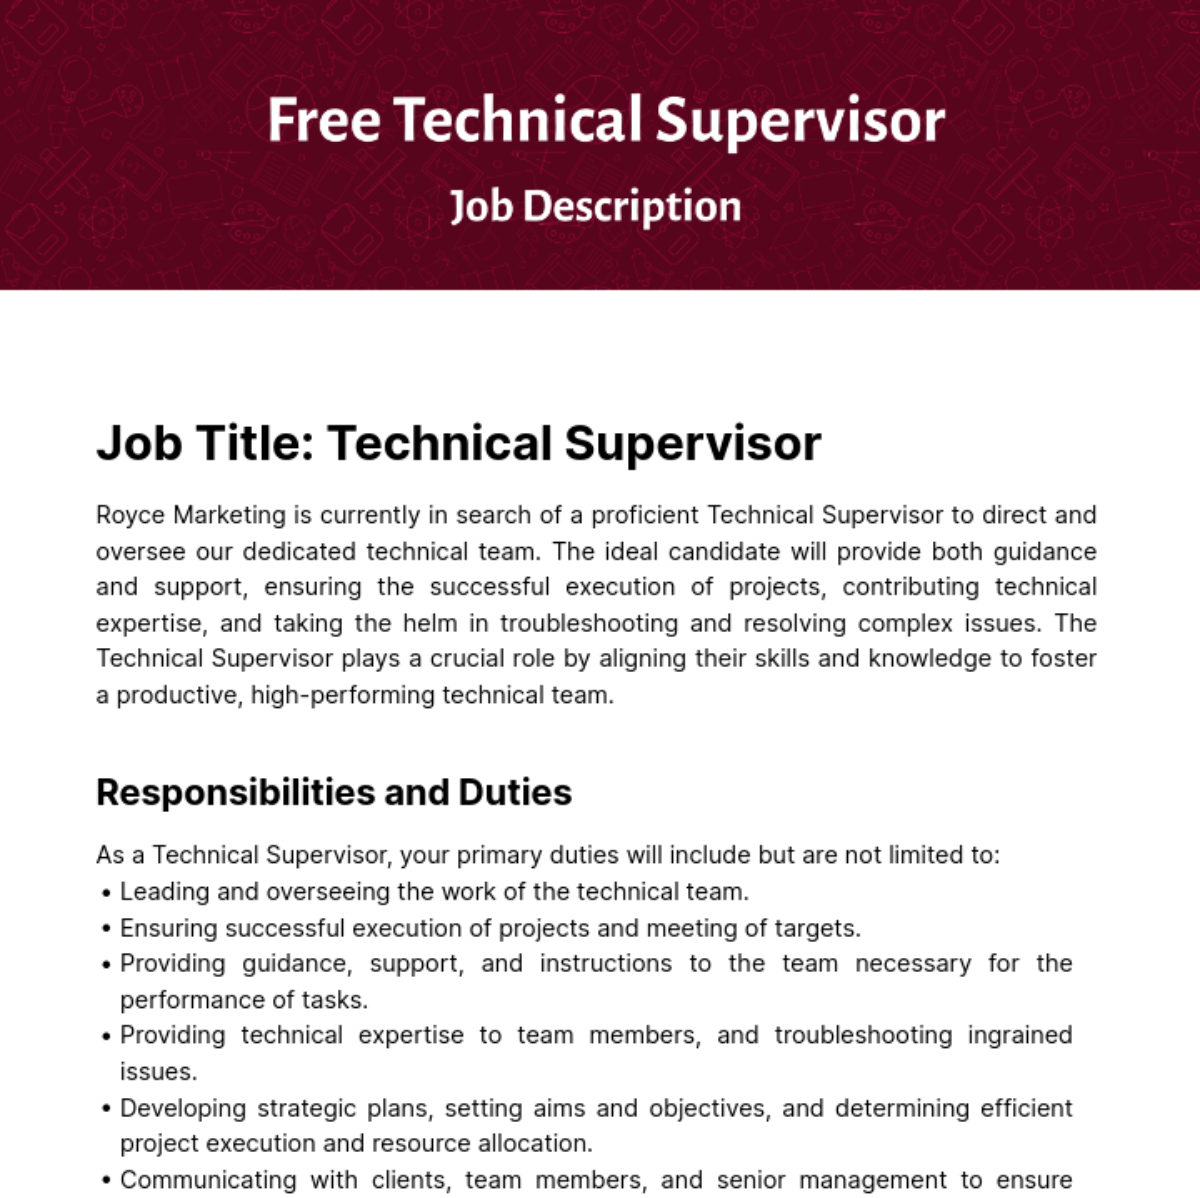 Technical Supervisor Job Description Template